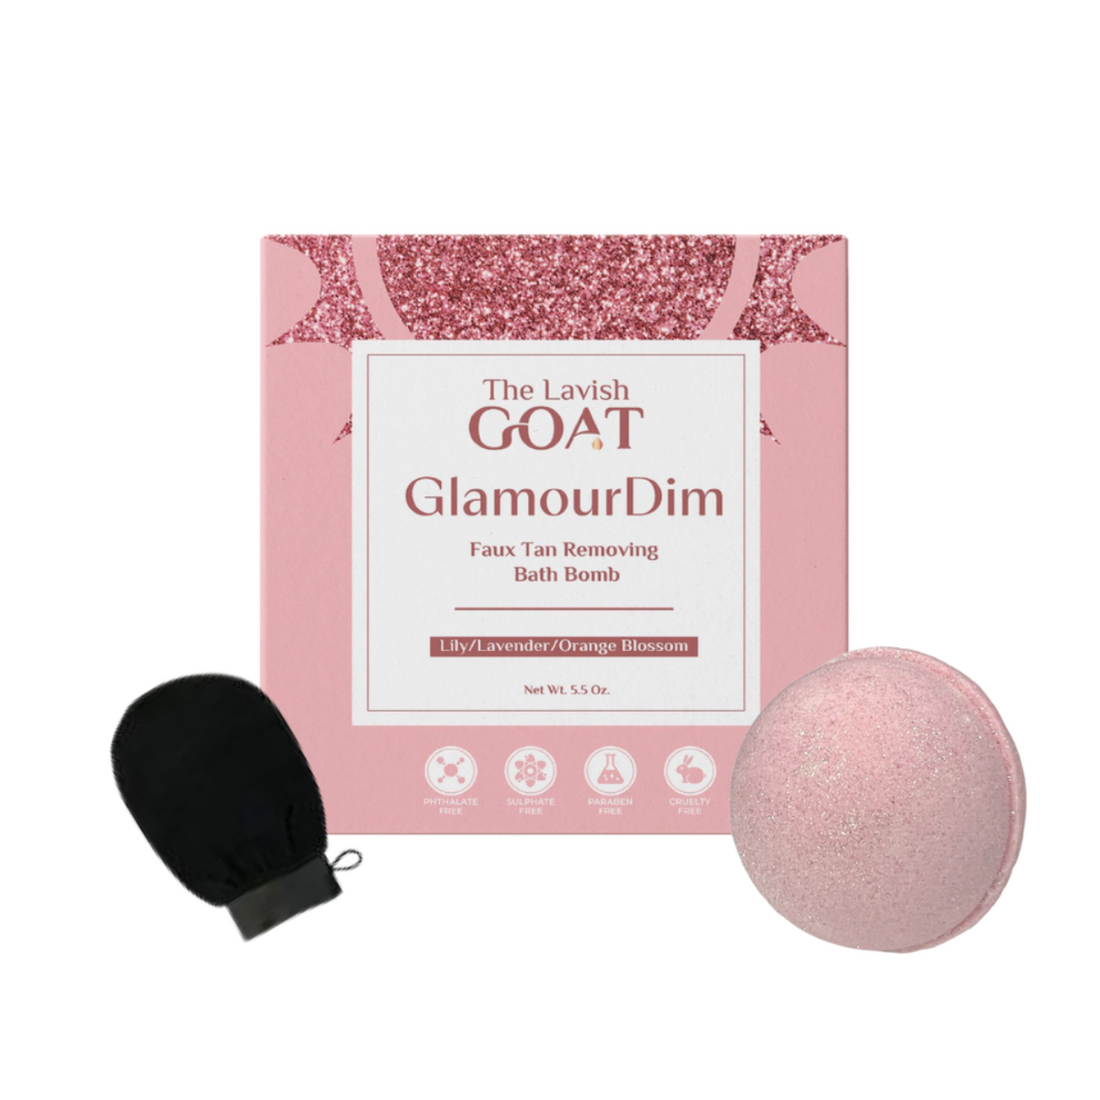 GlamourDim: The Revolutionary Self Tan Removing Bath Bomb by The Lavish Goat